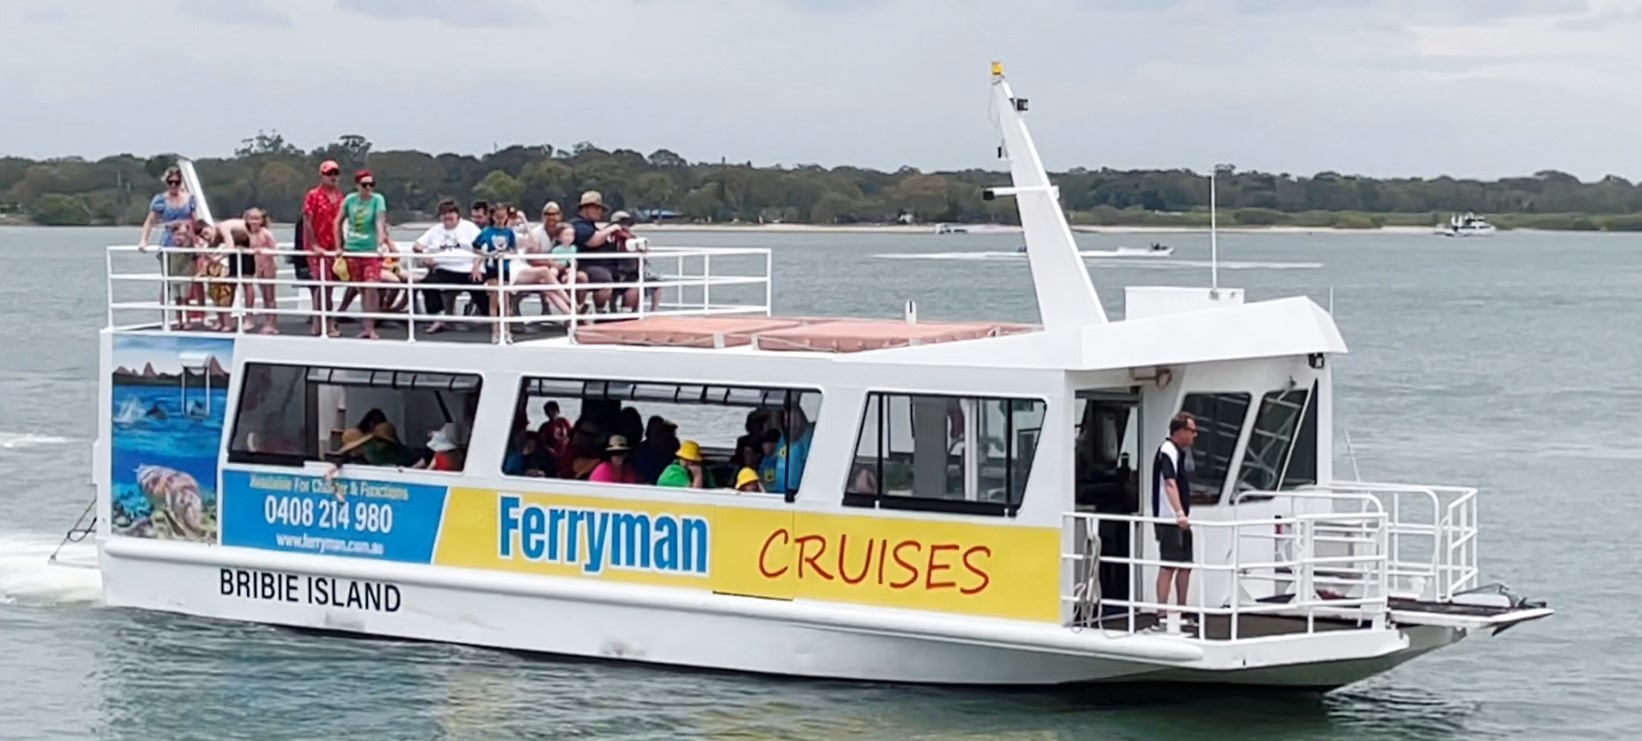 ferryman cruises photos